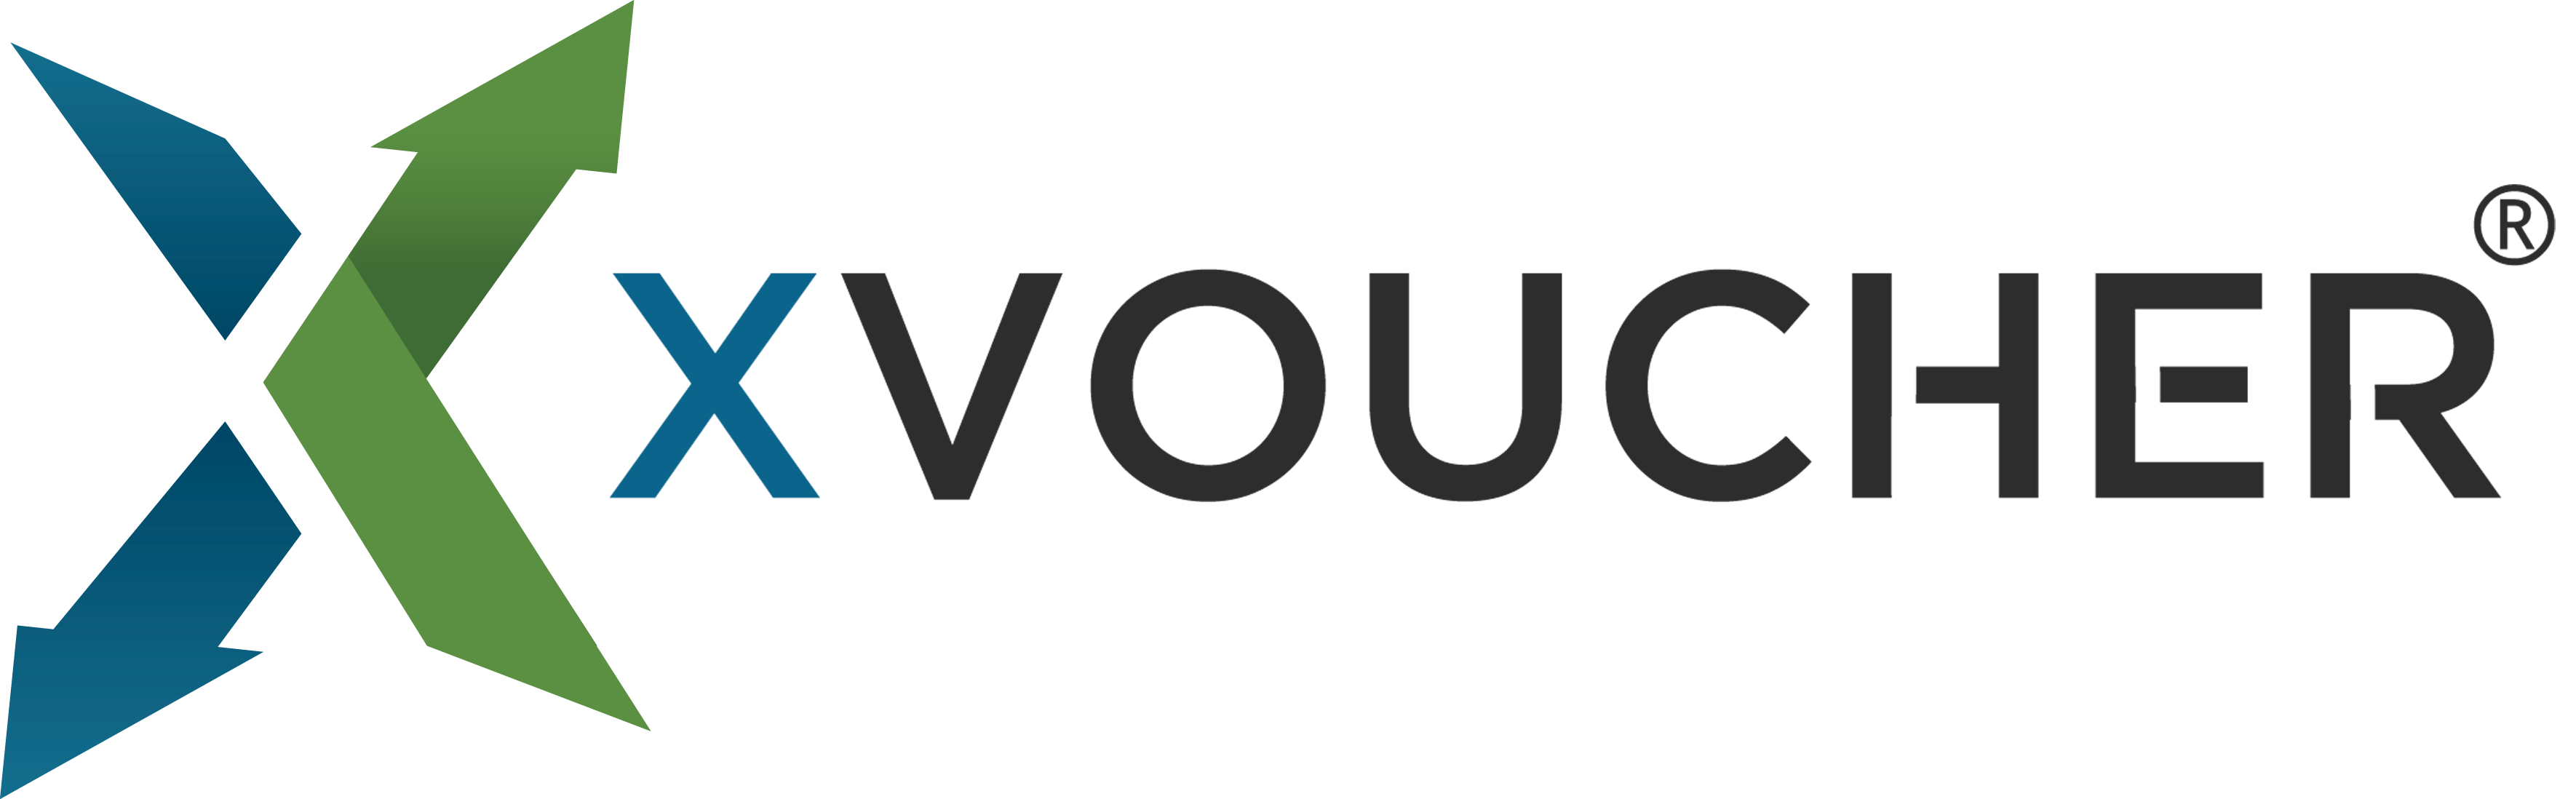 Xvoucher Logo